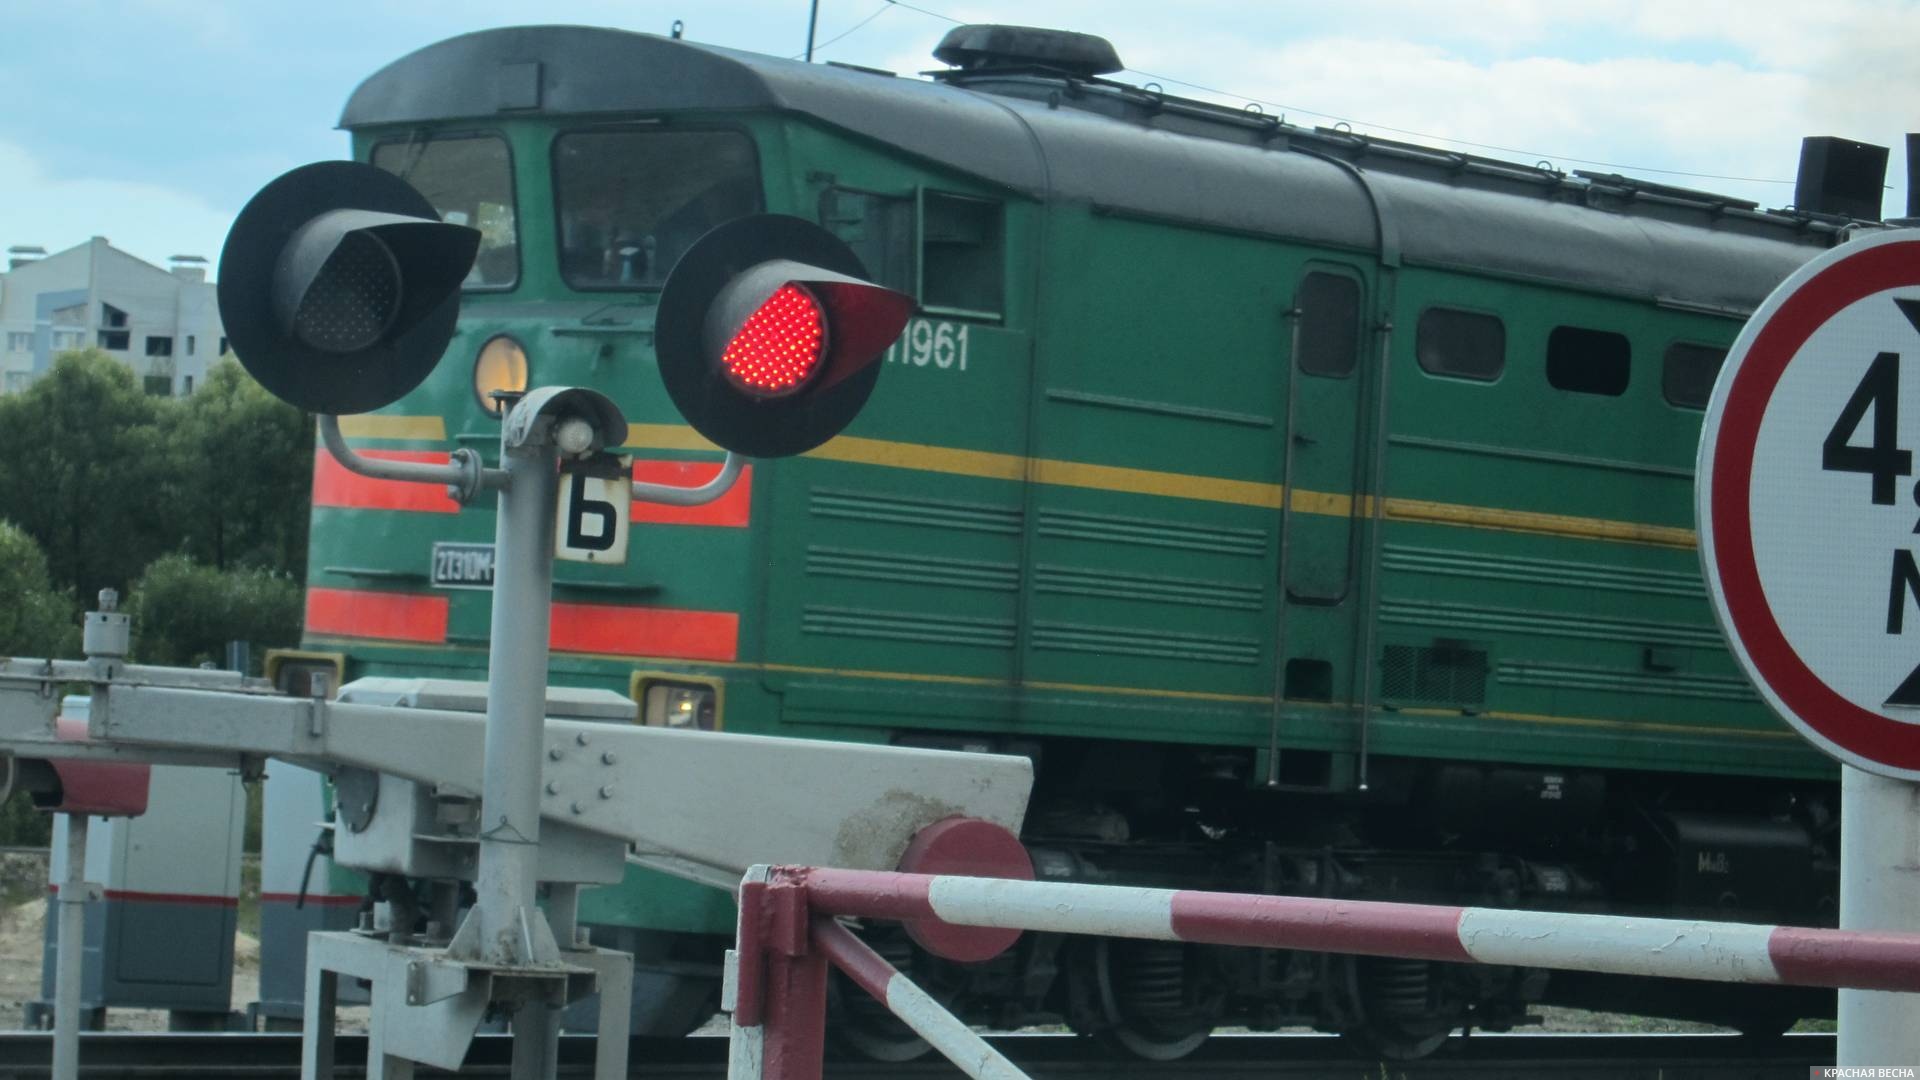 Видео жд переездов. Станция Арчеда Волгоградская. Железнодорожный переезд. ЖД переезд. Поезд на переезде.